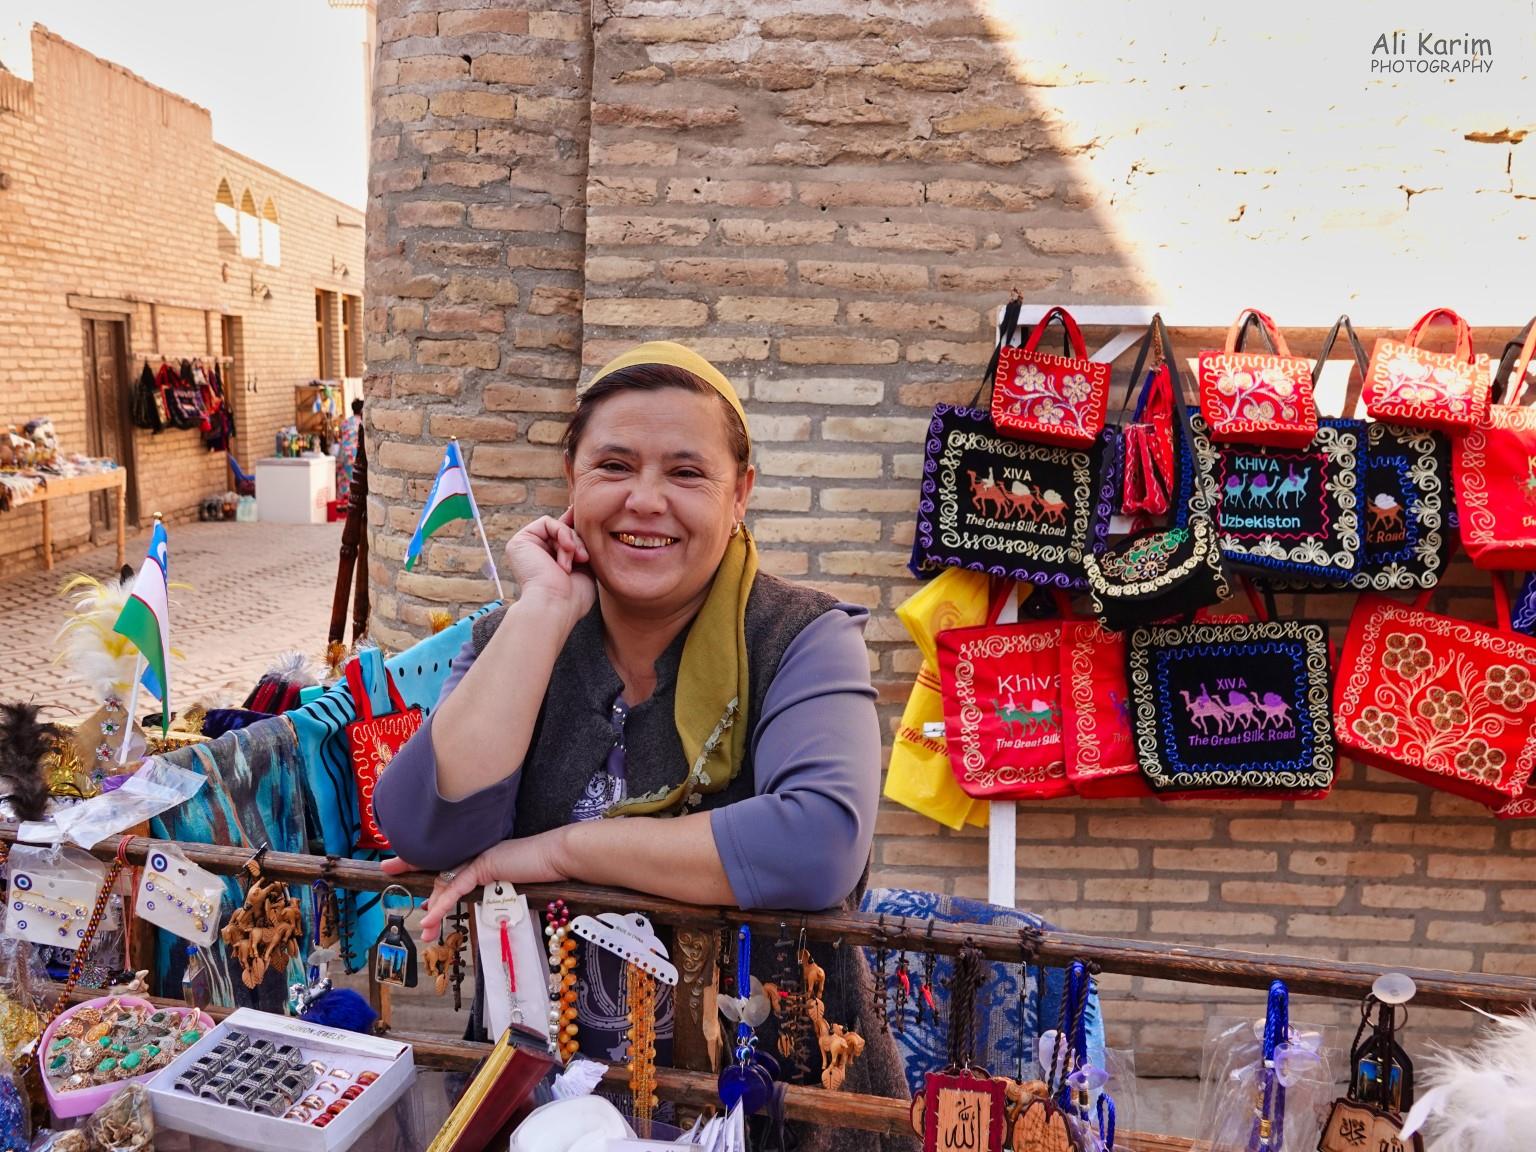 Khiva, Oct 2019, Love the friendly locals’ smiles:)